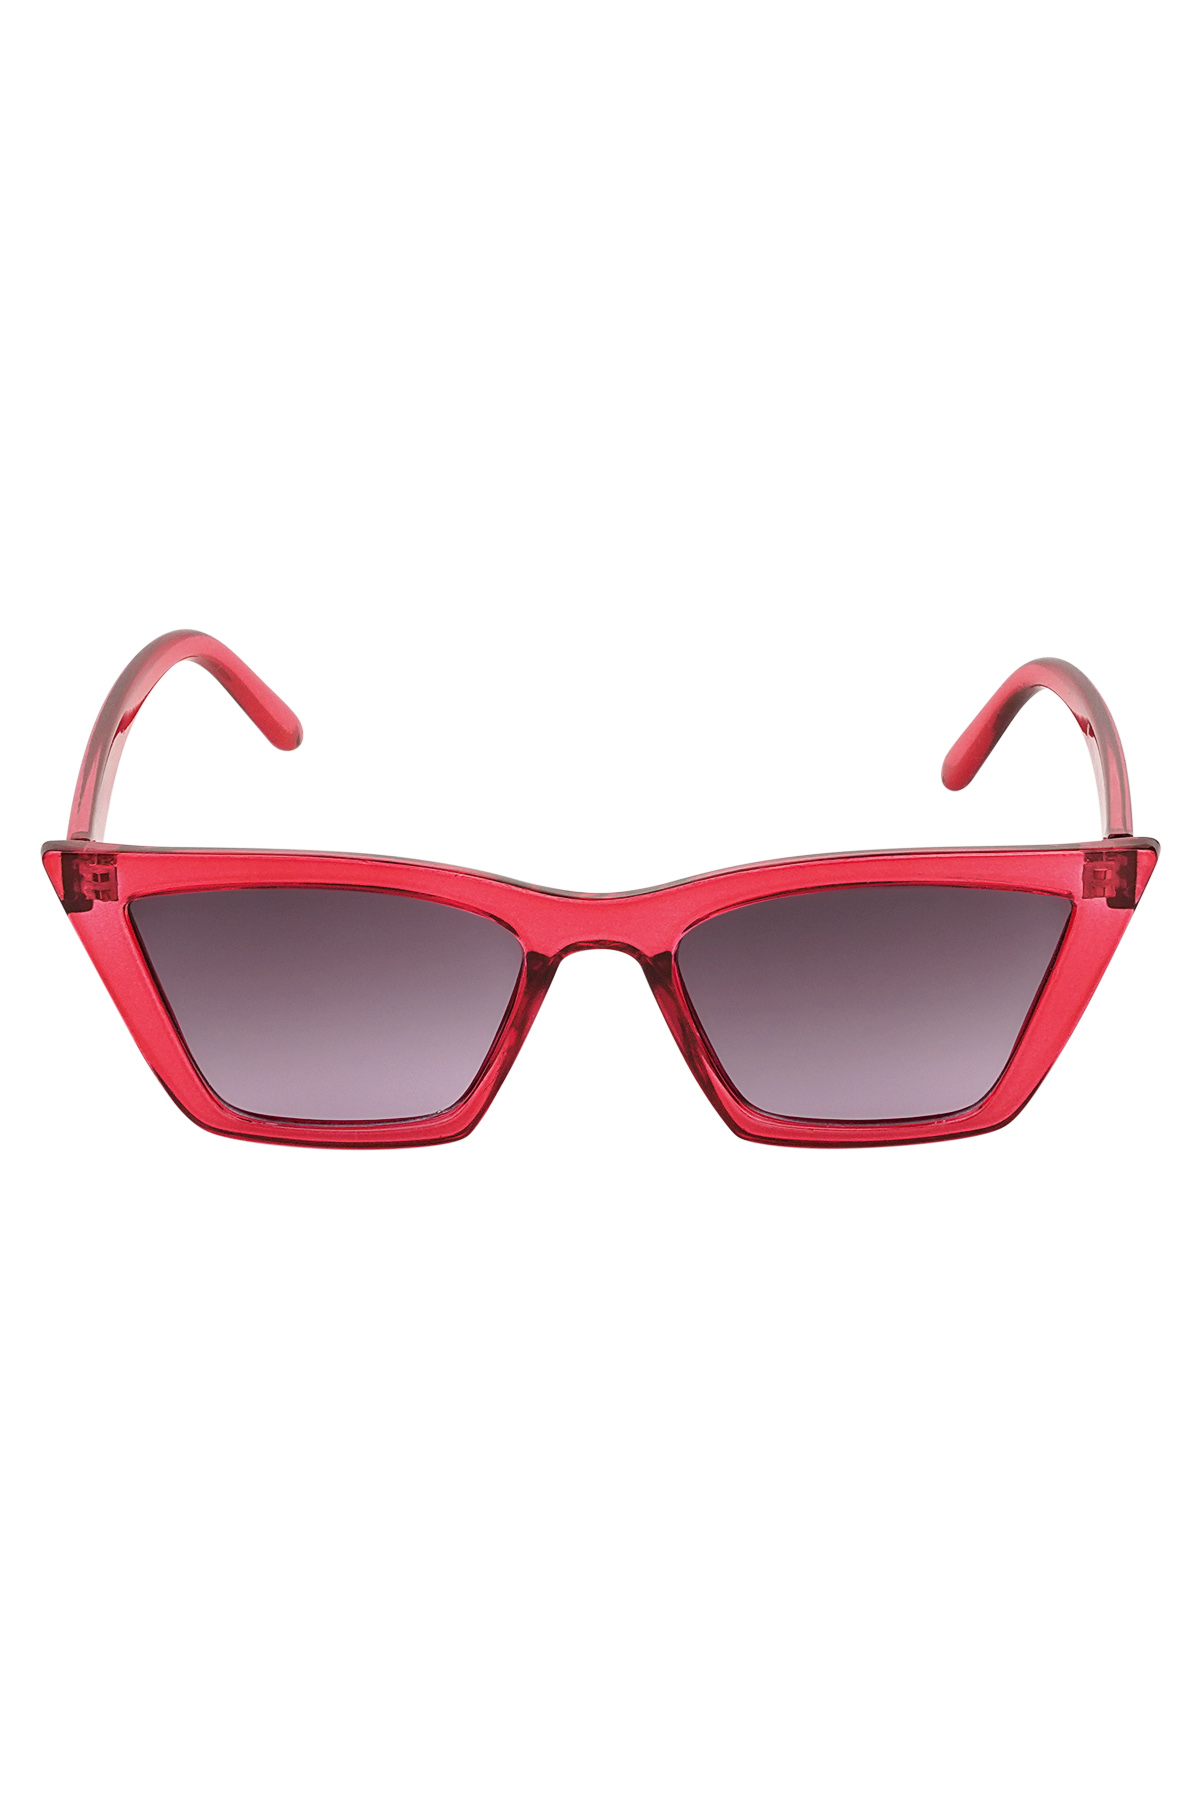 Monochrome cat eye sunglasses - red h5 Picture5